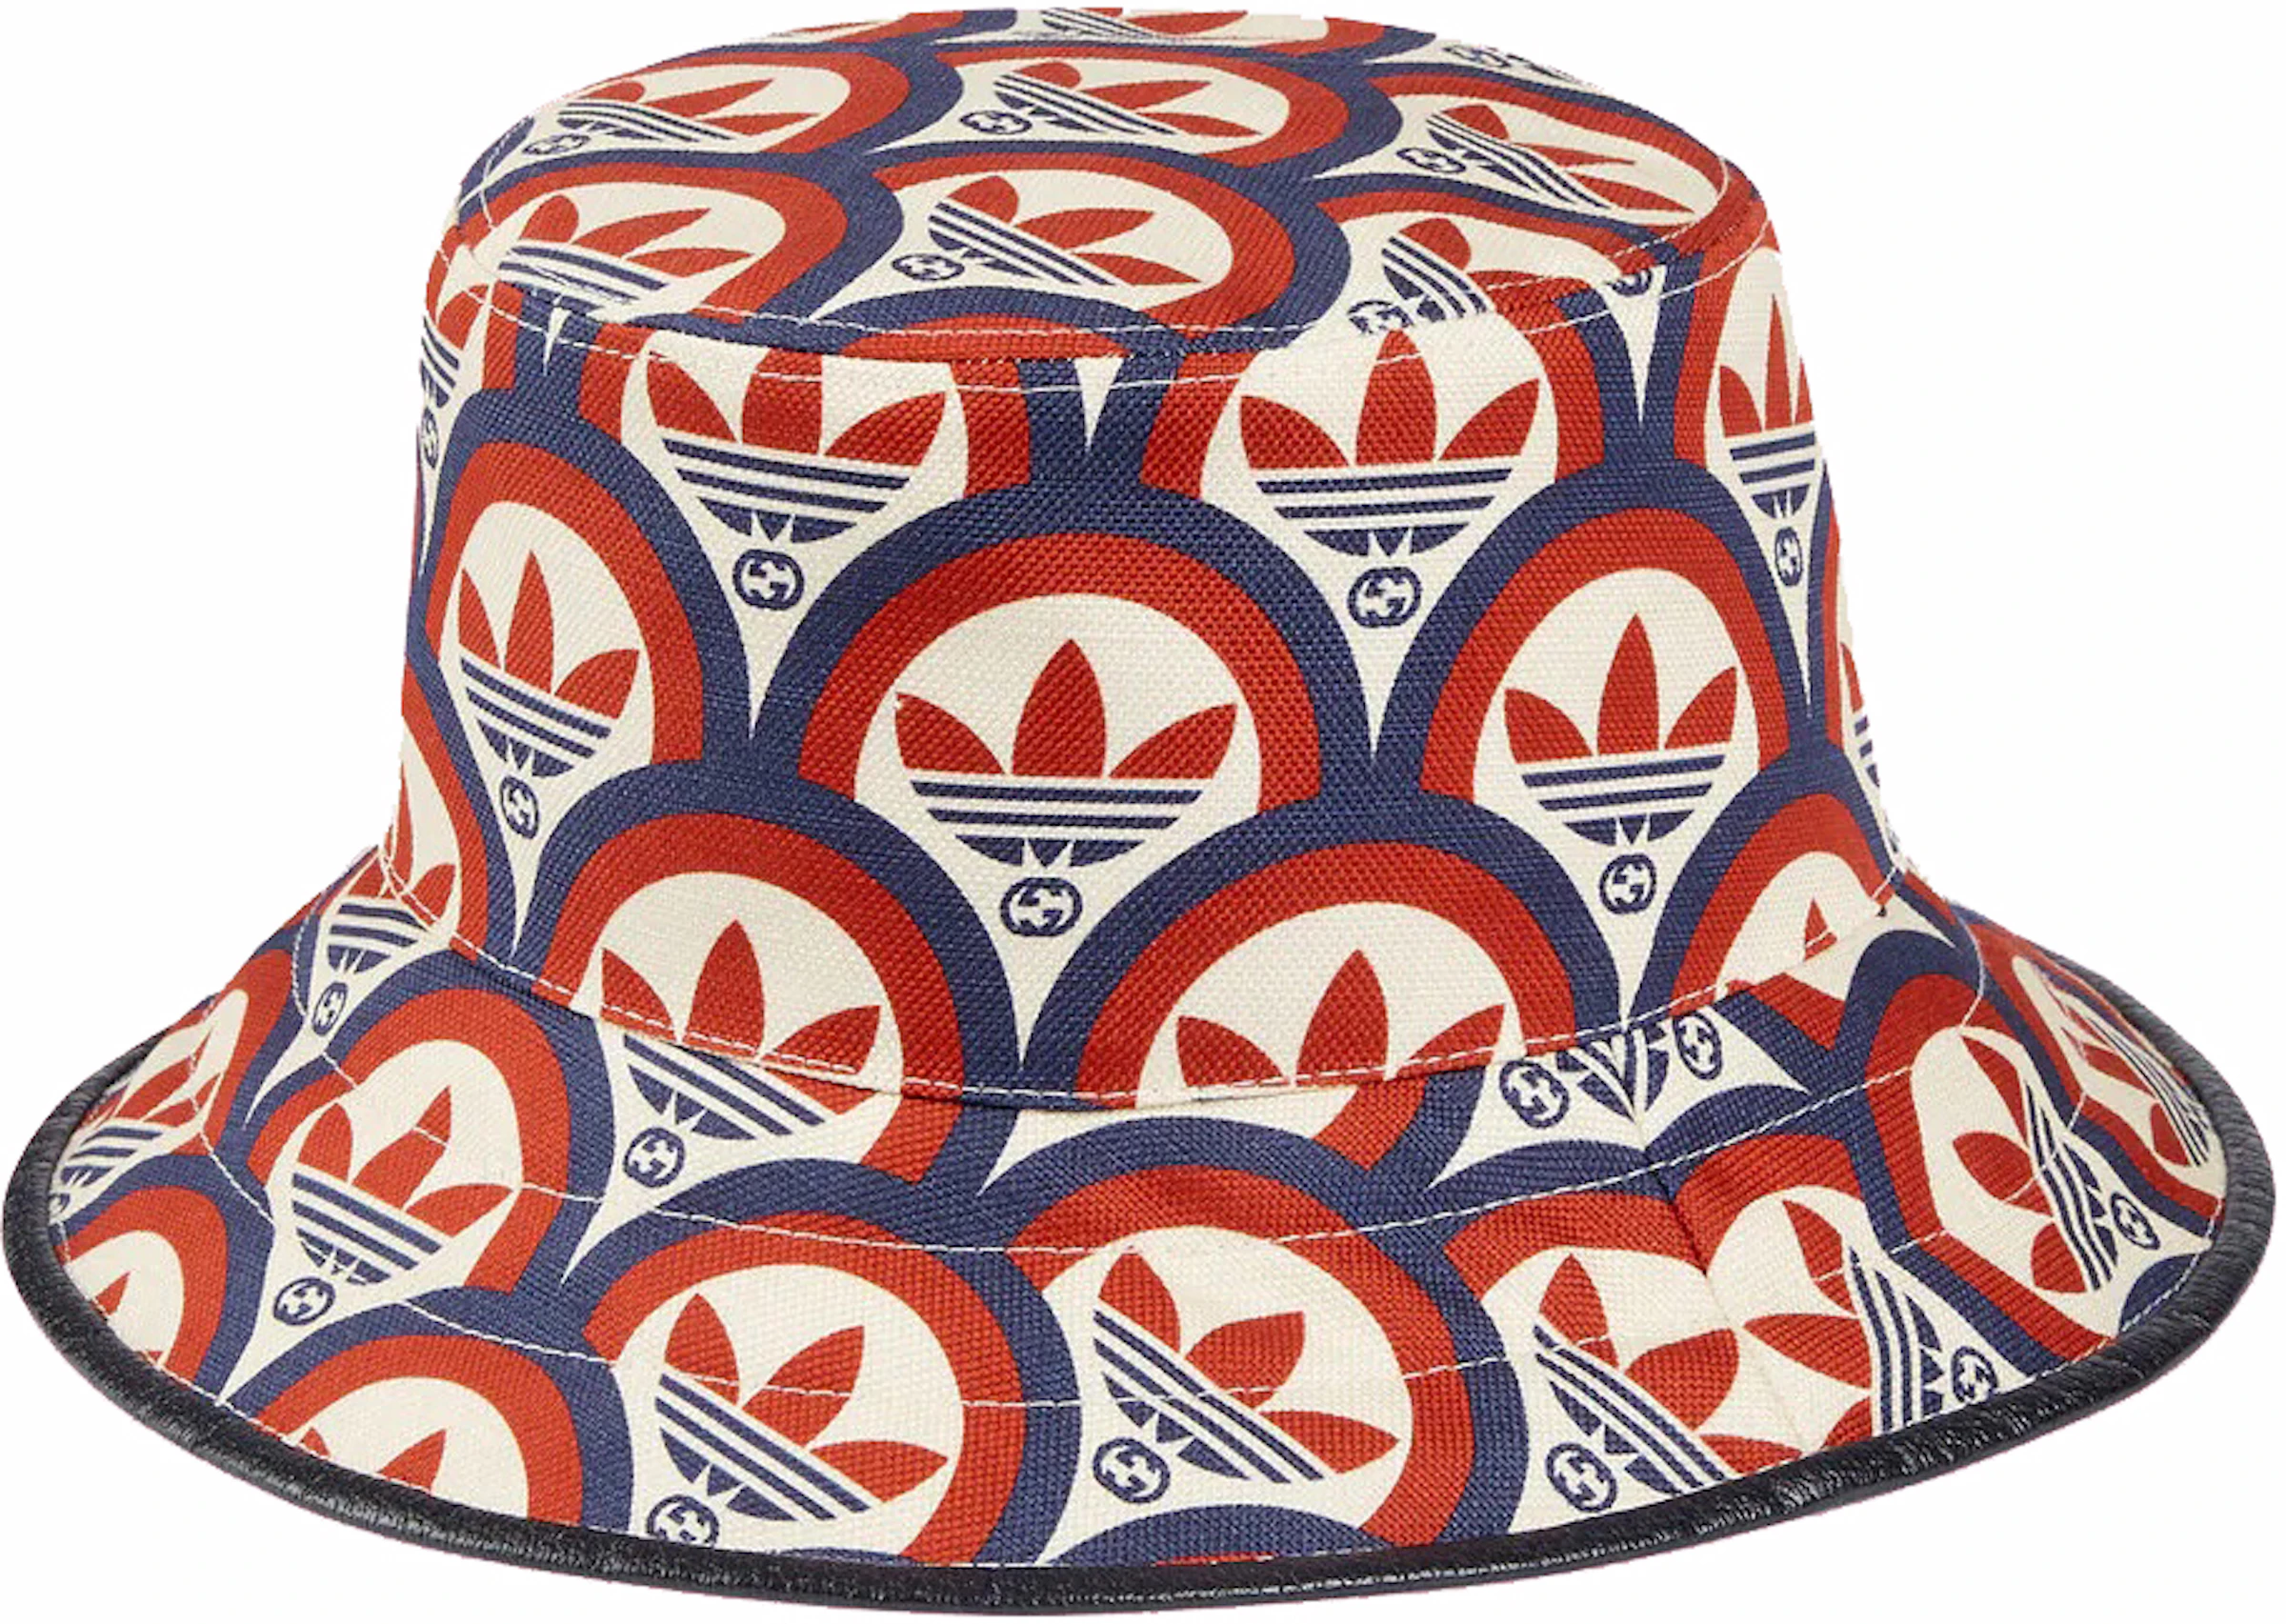 Gucci x adidas Bucket Hat Red/Blue - - US